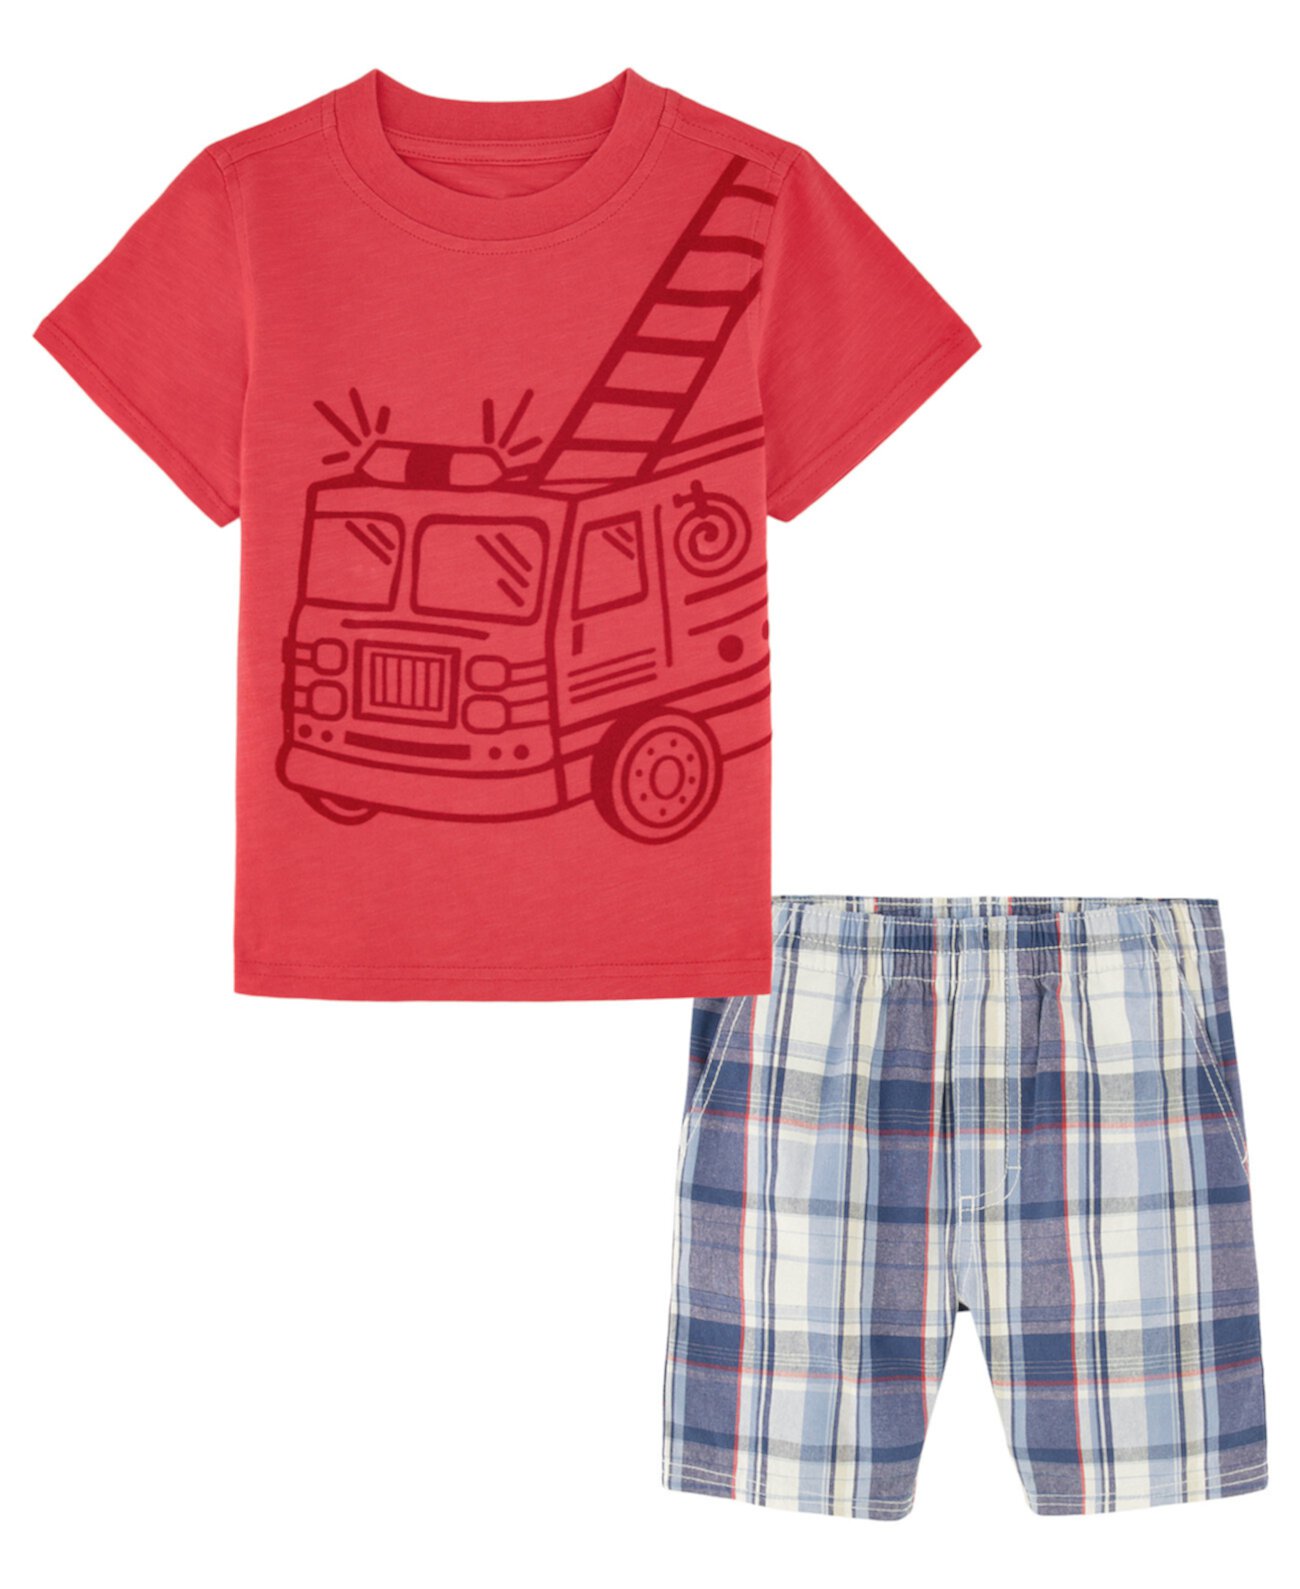 Little Boys Firetruck Short Sleeve T-shirt and Prewashed Plaid Shorts Kids Headquarters